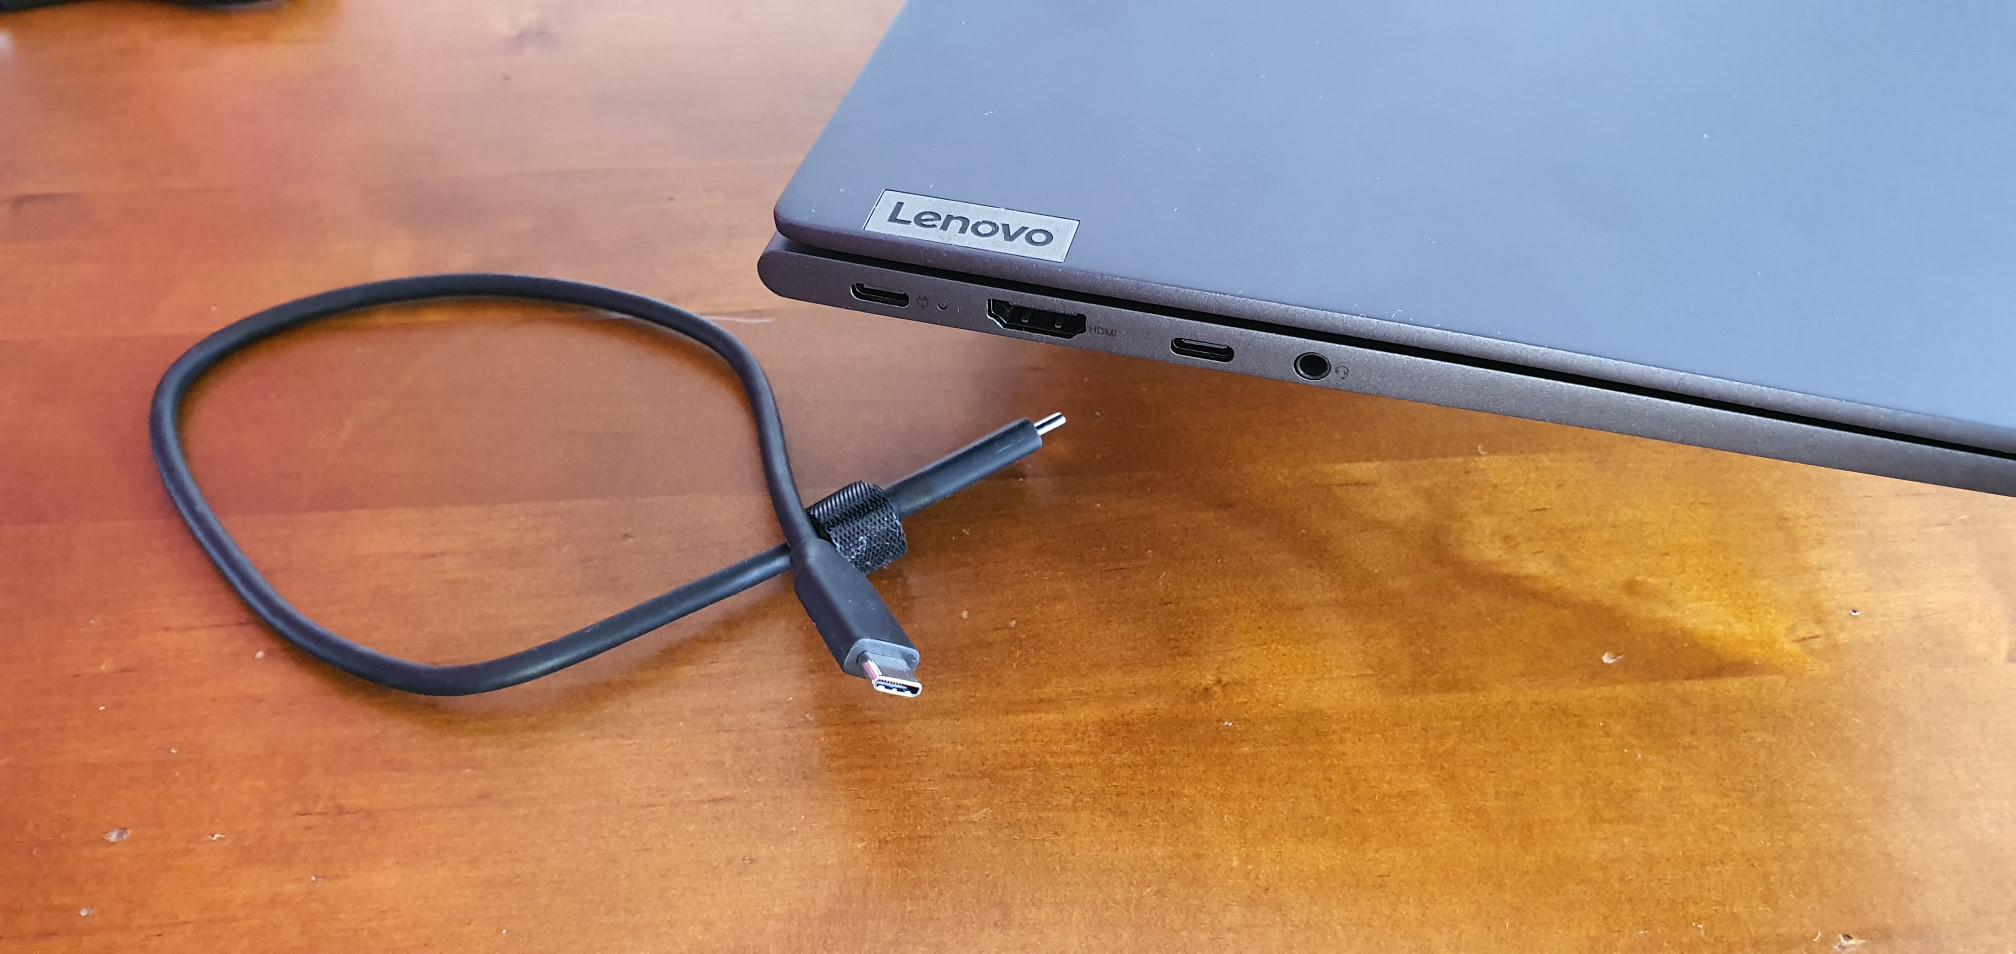 USB-C cable next to close up of USB-C ports on the Lenovo Yoga Slim 7